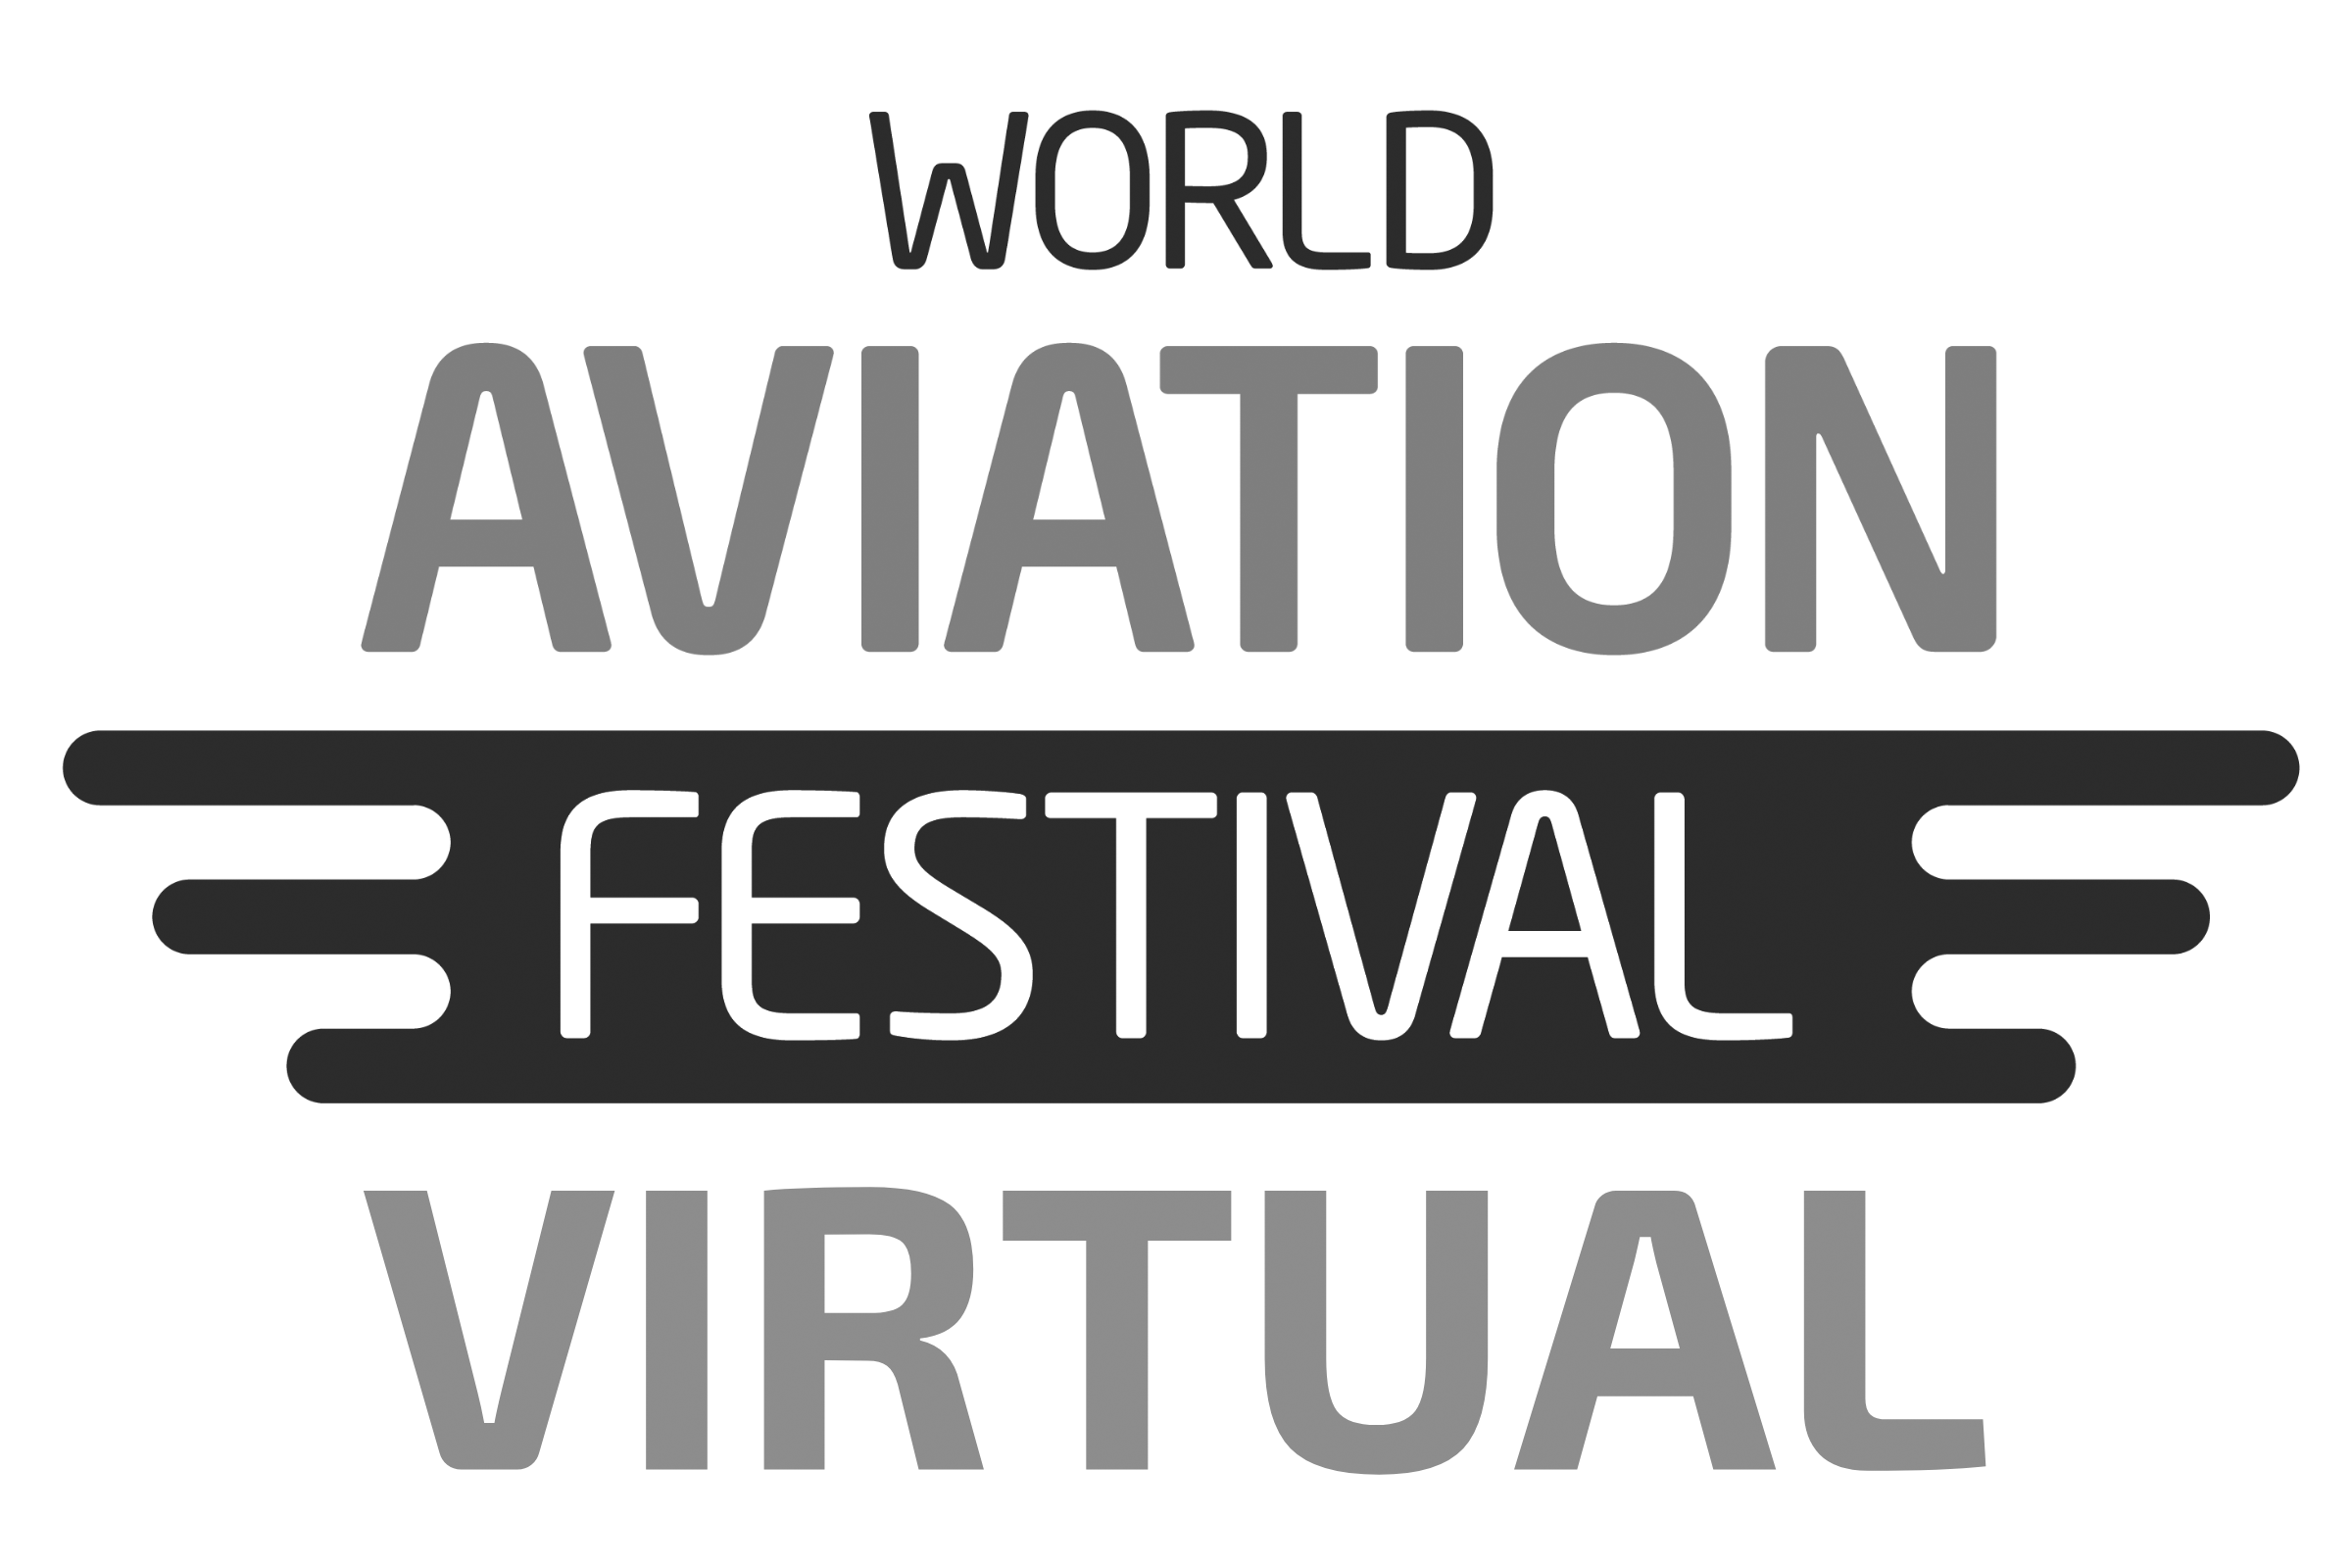  alt='World Aviation Festival Virtual'  Title='World Aviation Festival Virtual' 